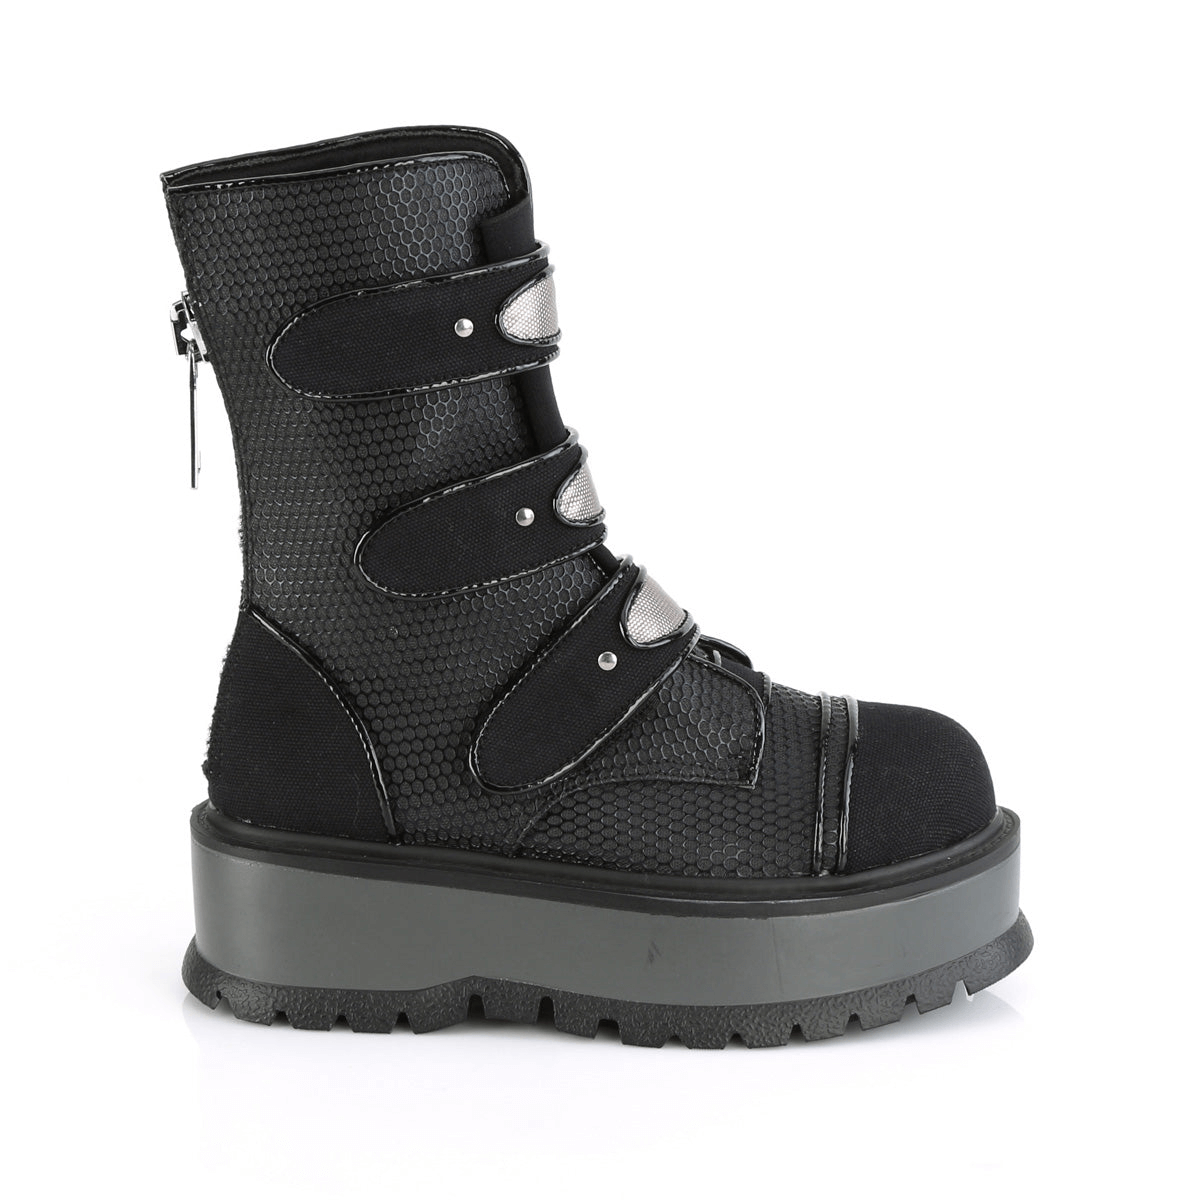 DEMONIA Punk Studded Strap Platform Boots With Metal Zip